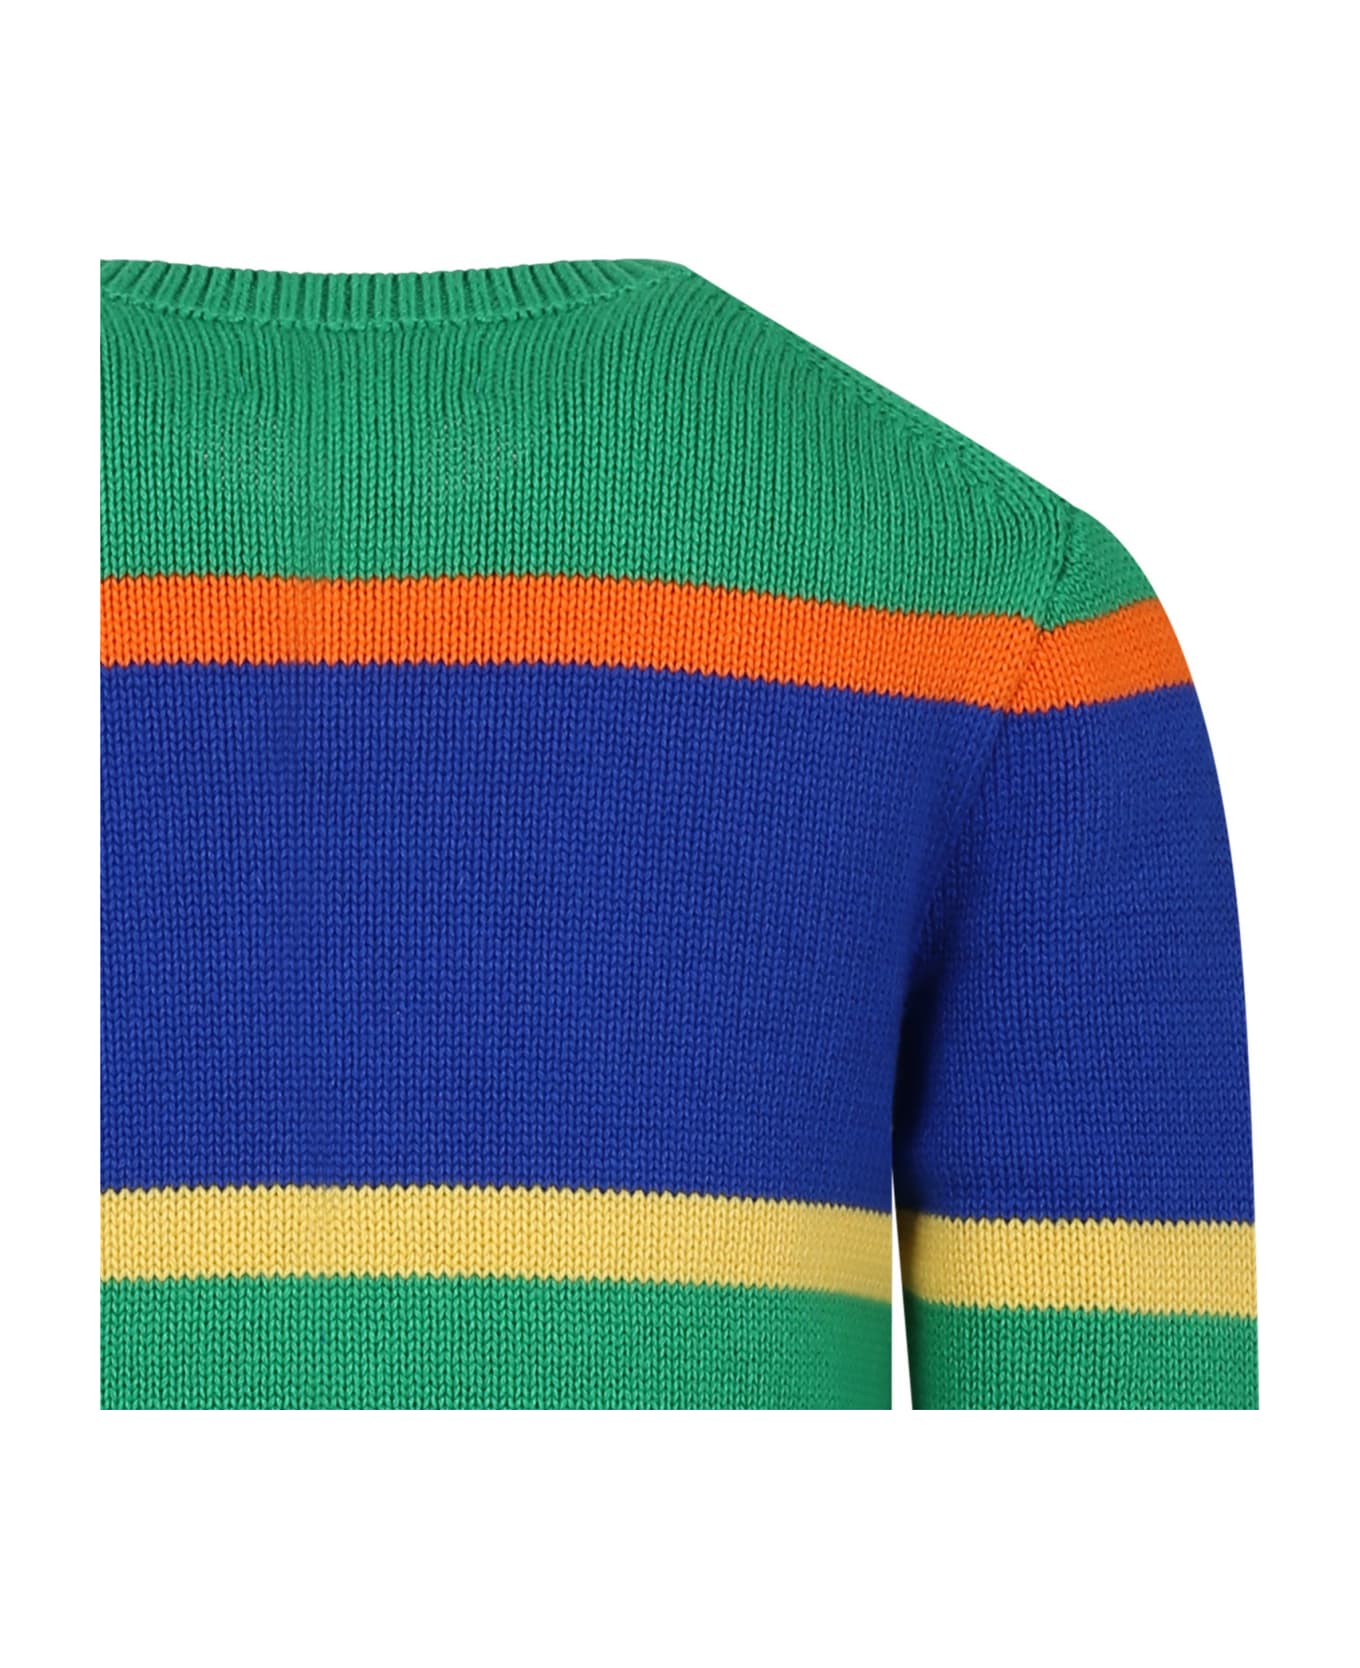 Ralph Lauren Blue Sweater For Boy With Logo And Iconic Pony - Multicolor ニットウェア＆スウェットシャツ